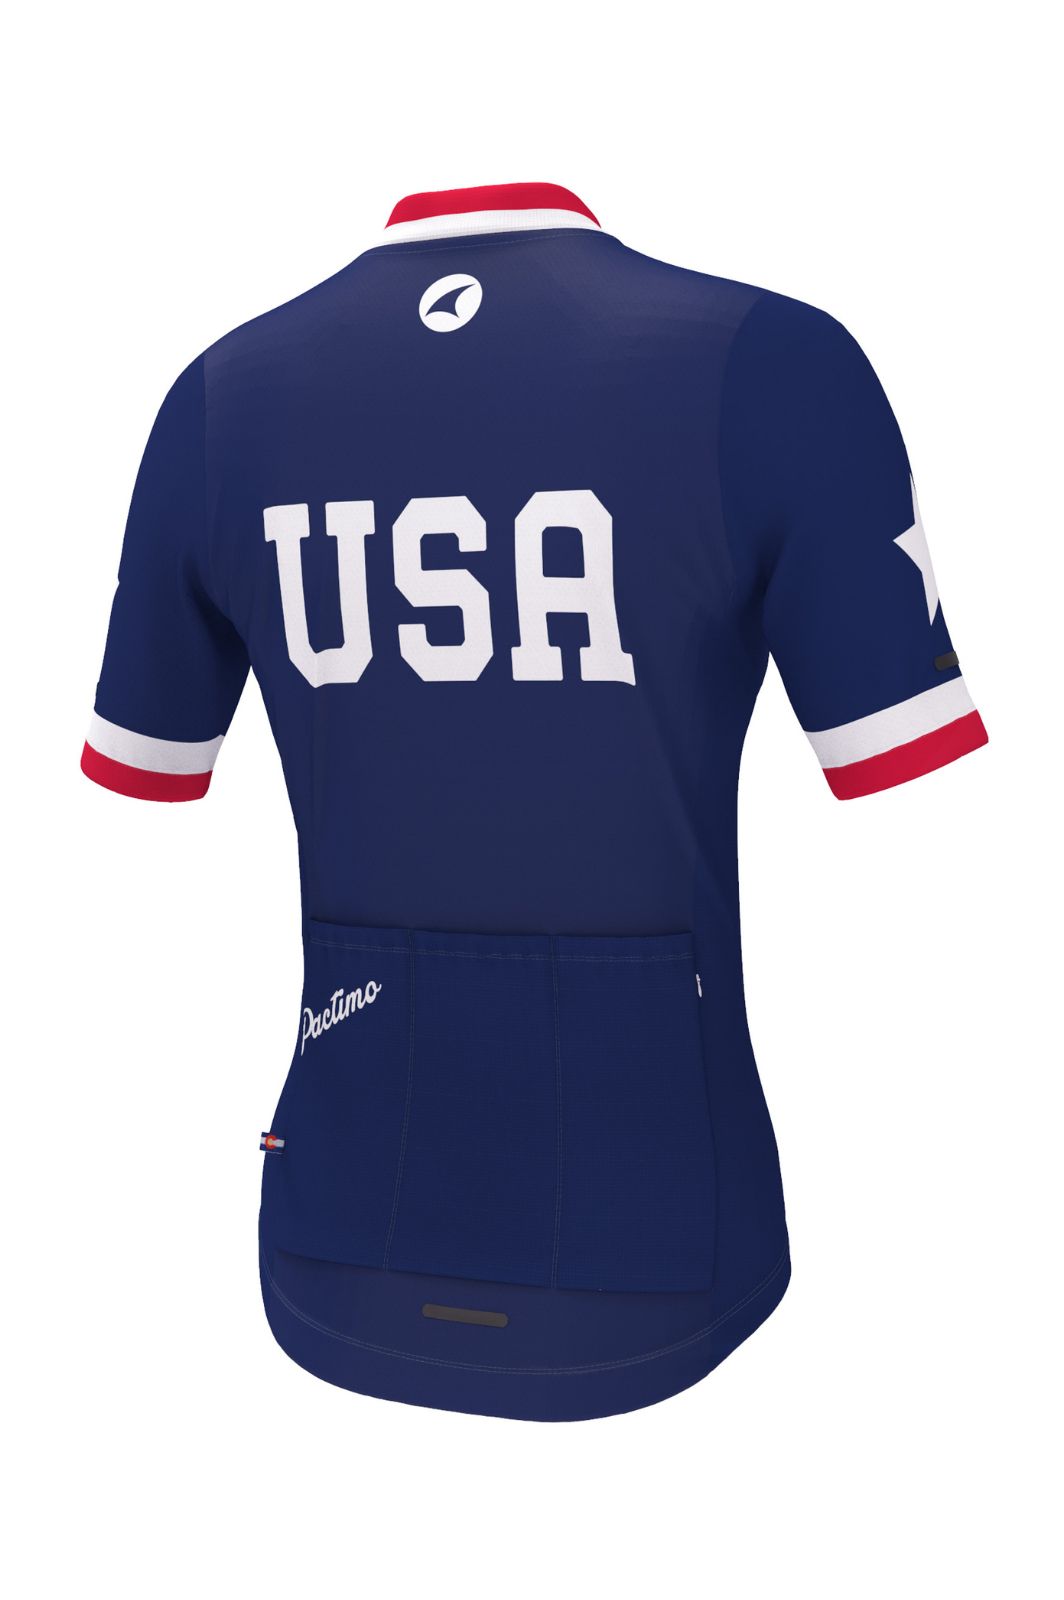 Women's Retro USA Cycling Jersey - Back View